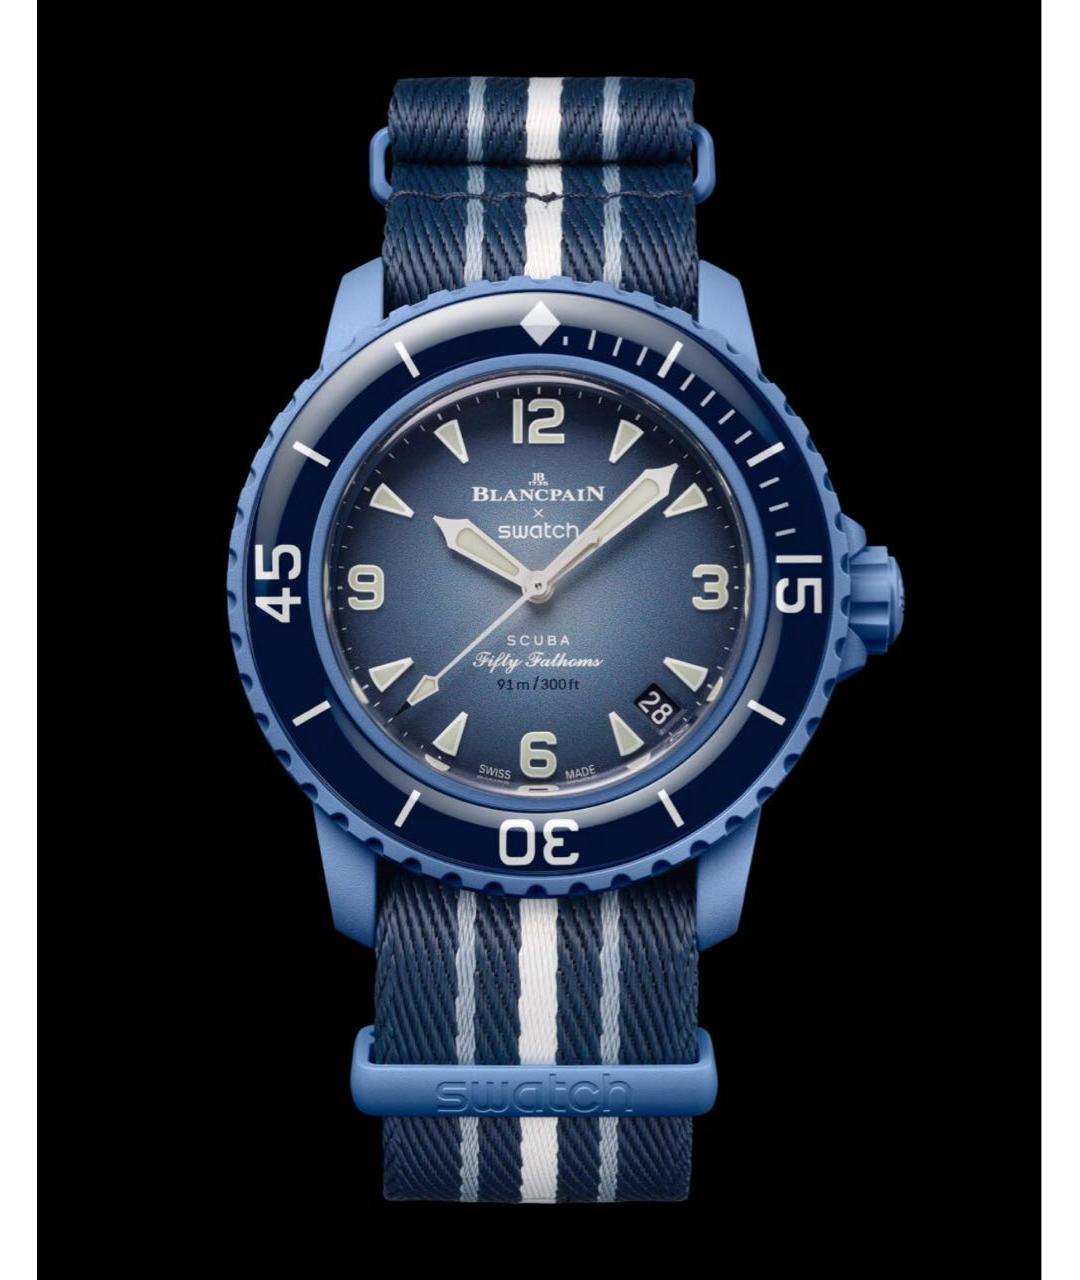 Blancpain Синие керамические часы, фото 7